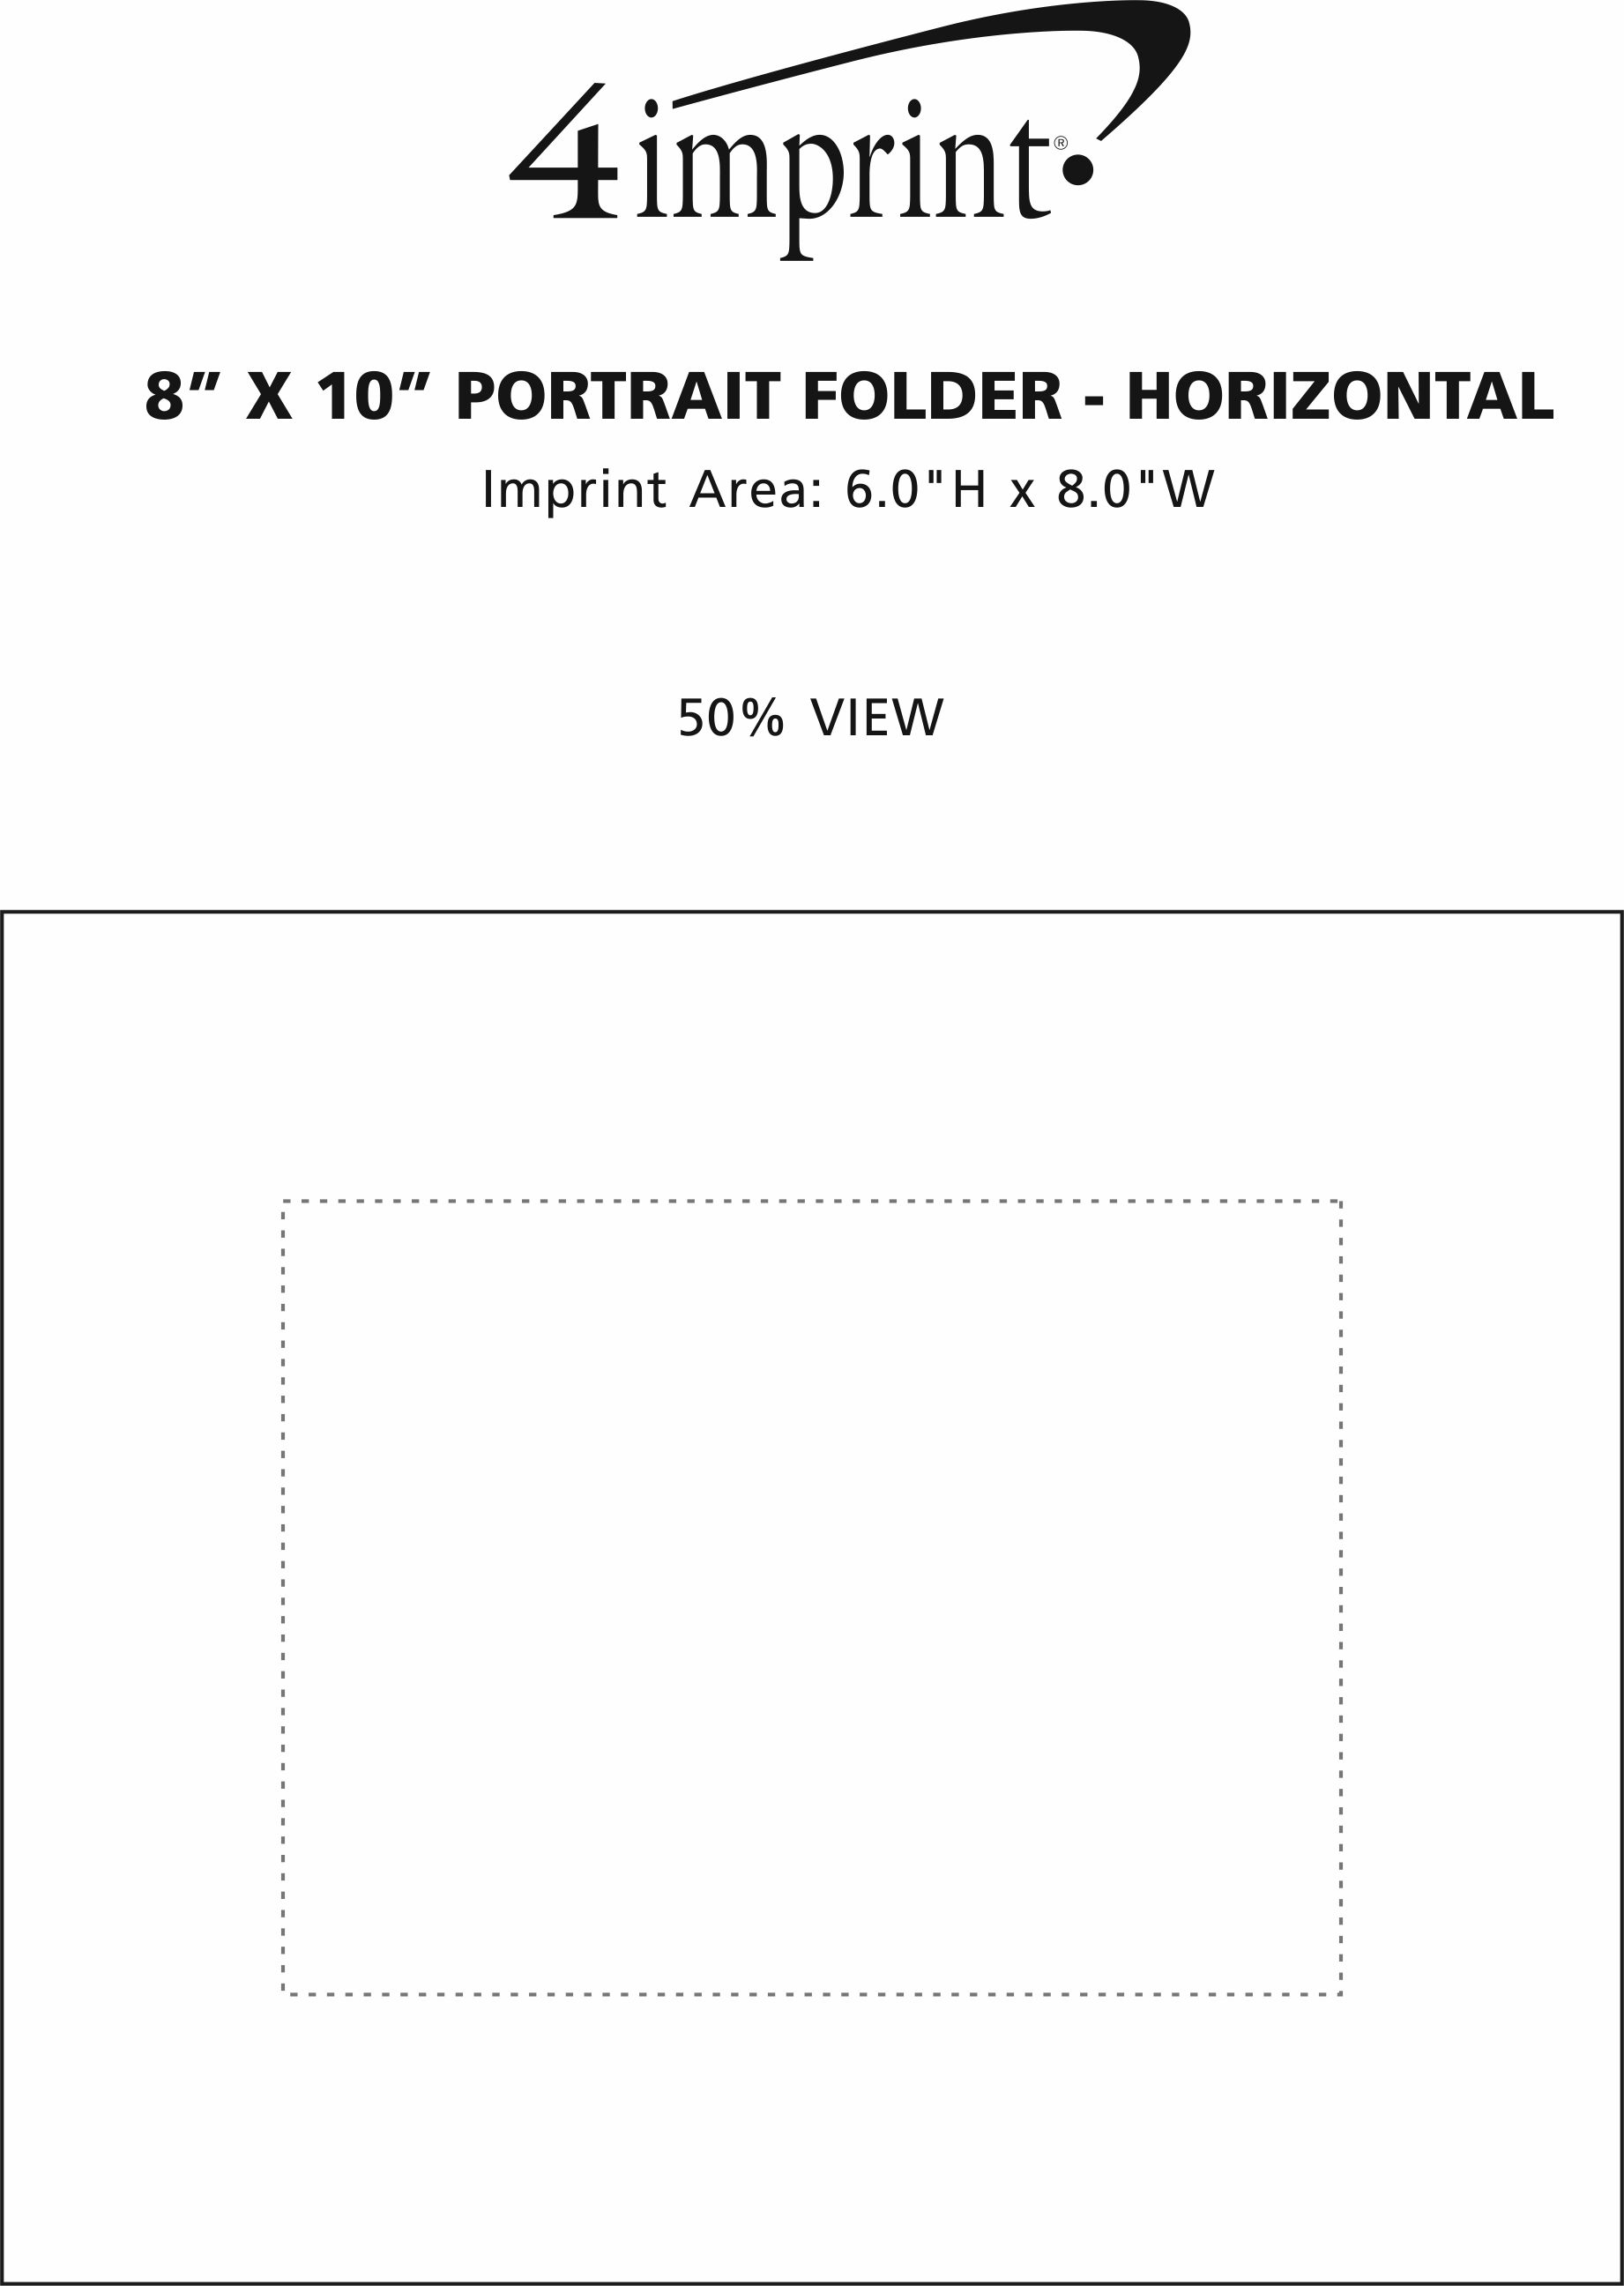 Imprint Area of 8" x 10" Portrait Folder - Horizontal